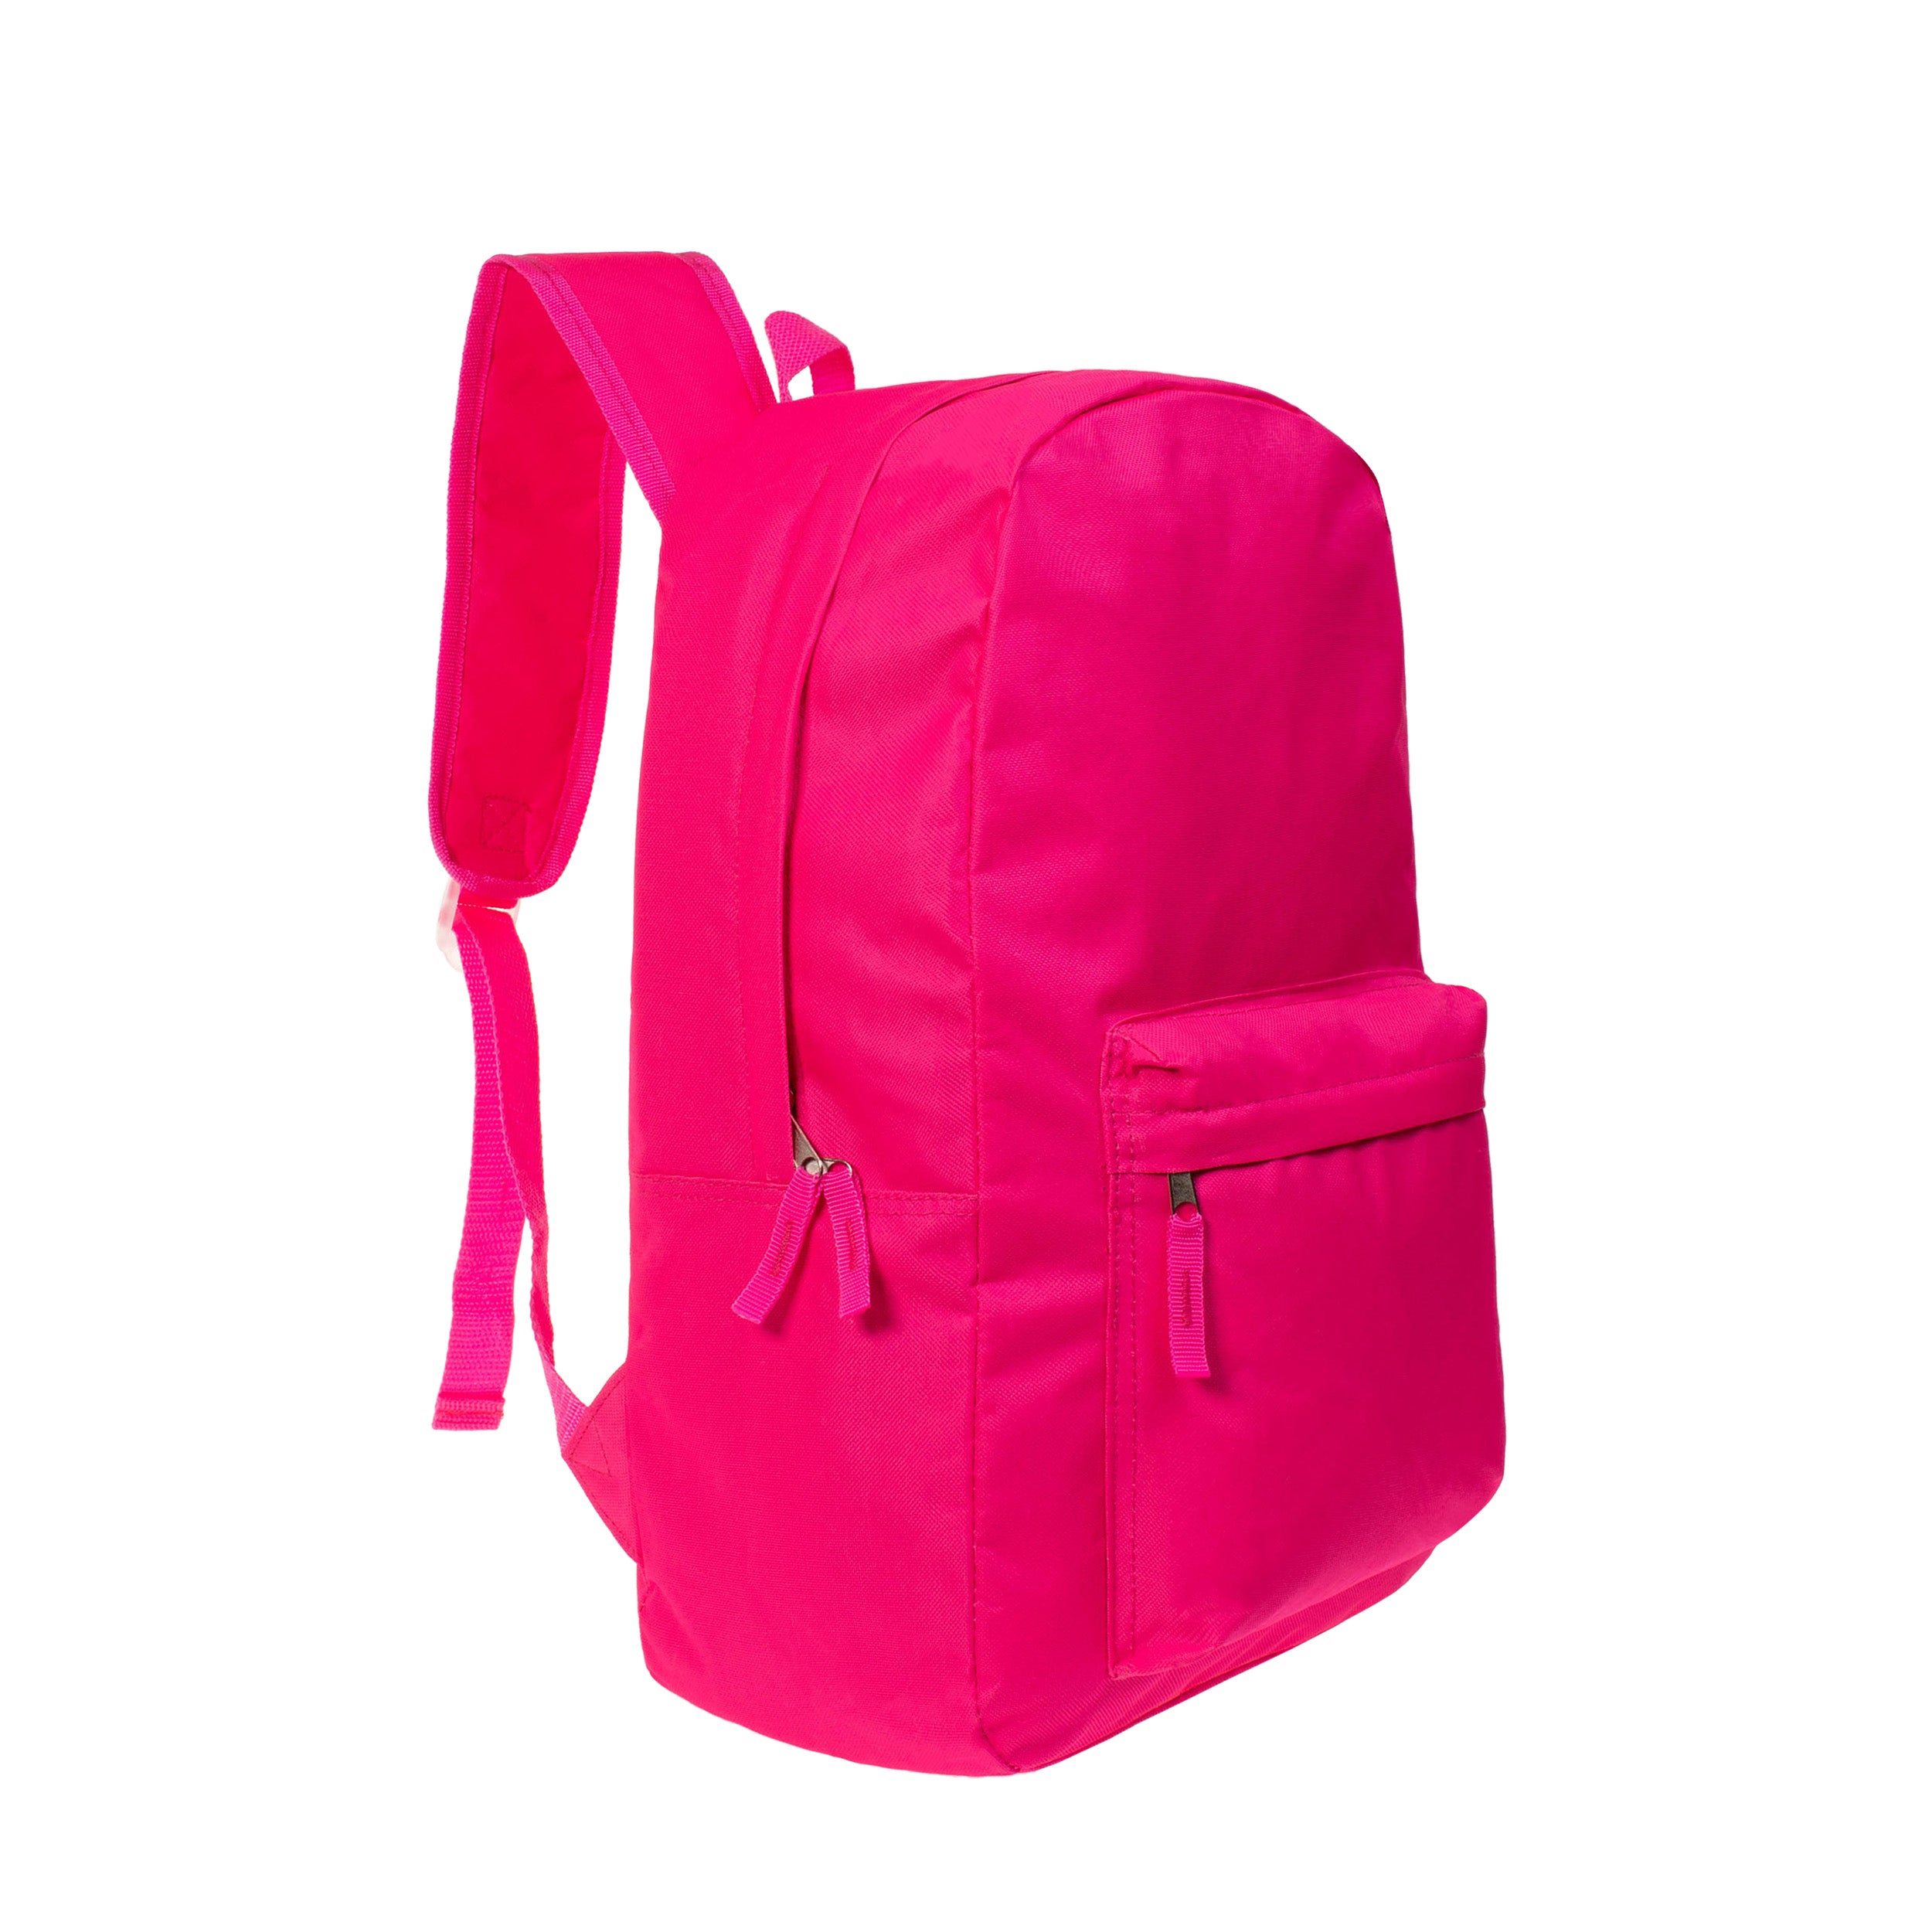 17" Bright Wholesale School Backpack in 6 Colors for Kids - Bulk Case of 24 Backpacks